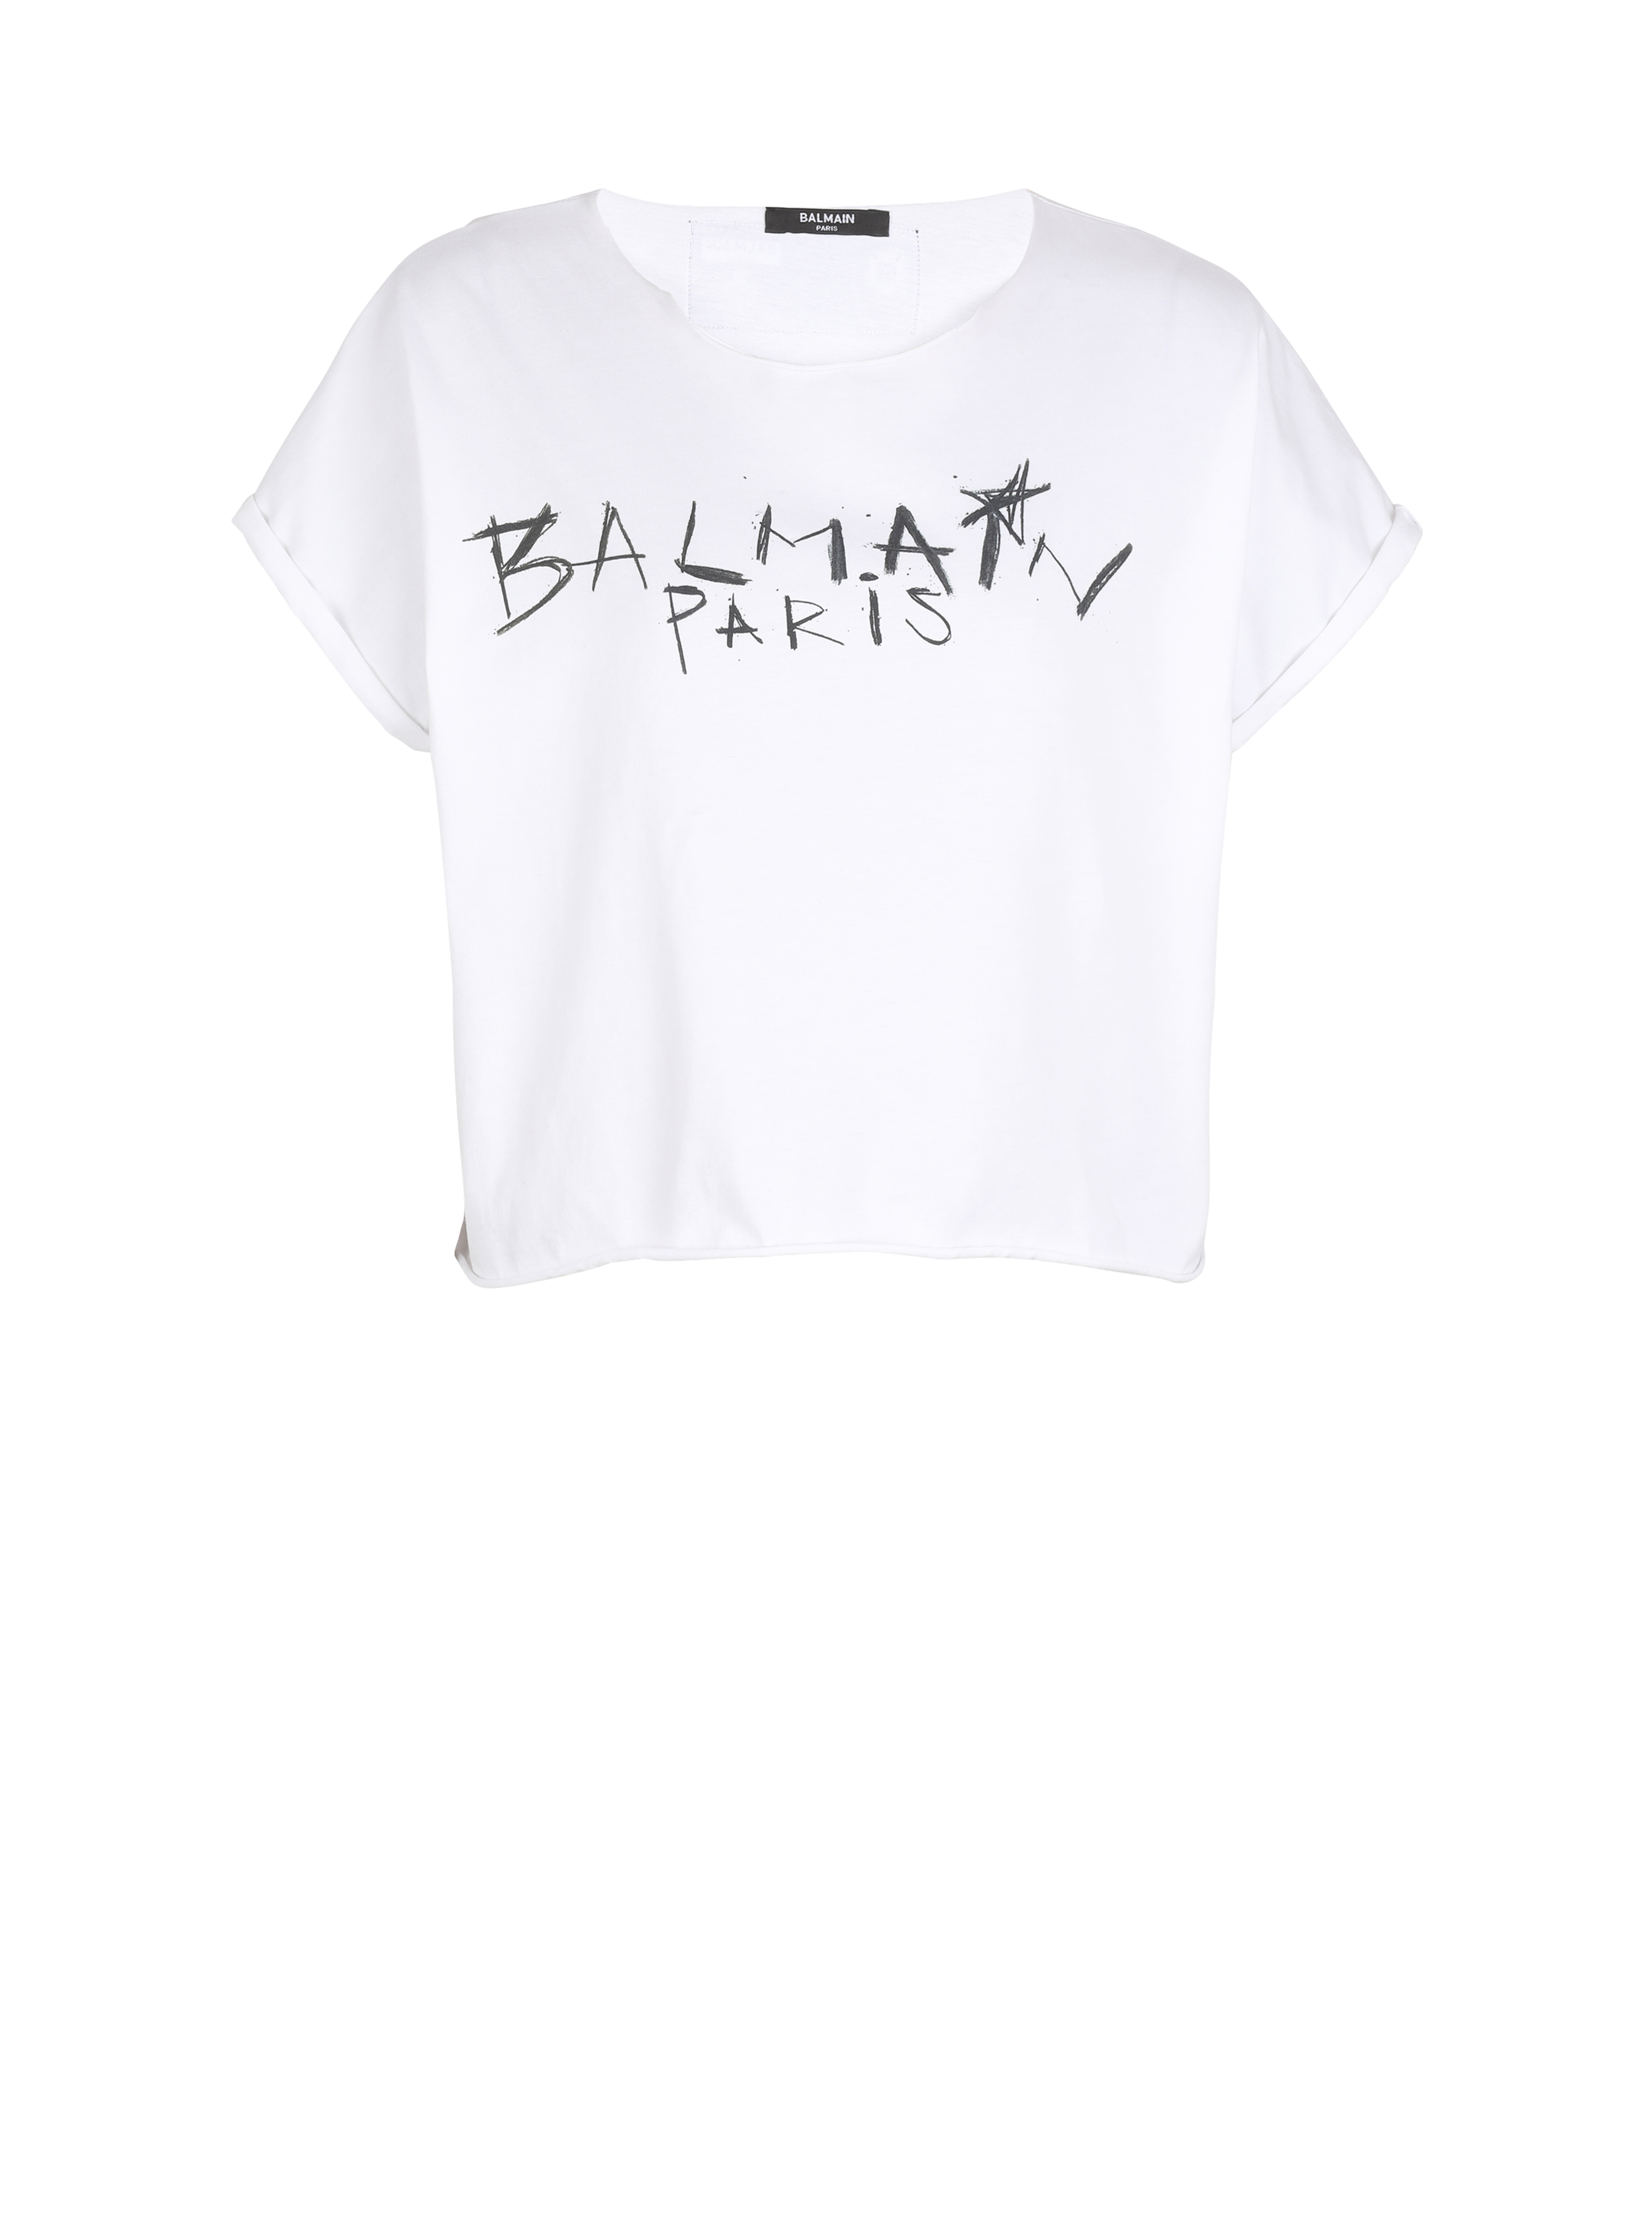 Camiseta corta de algodón con estampado grafiti de Balmain, blanco